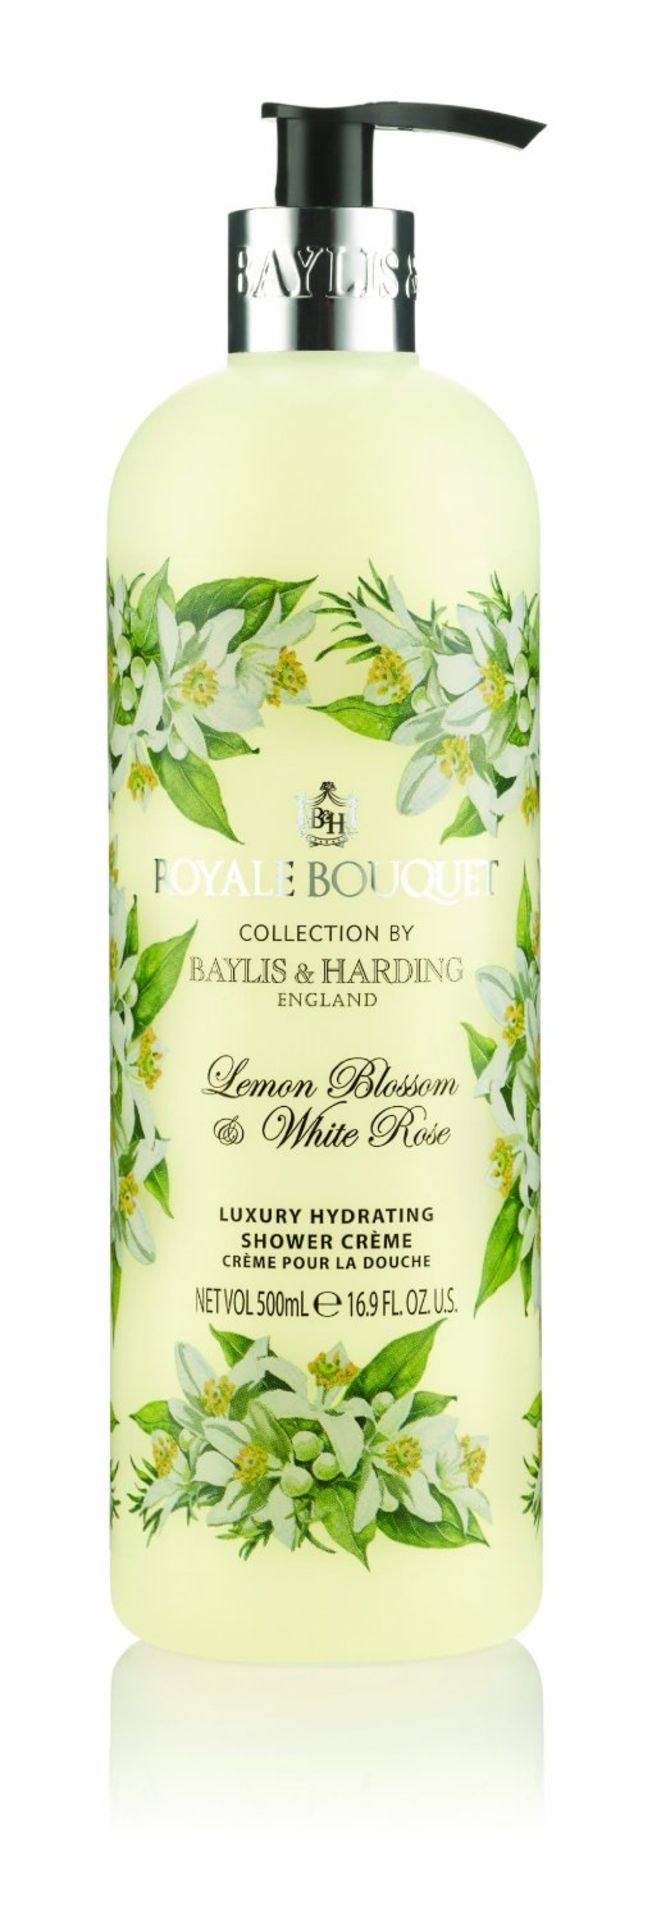 V Brand New 6 x 500ml Baylis and Harding Lemon Blosson and White Rose Luxury Hydrating Shower